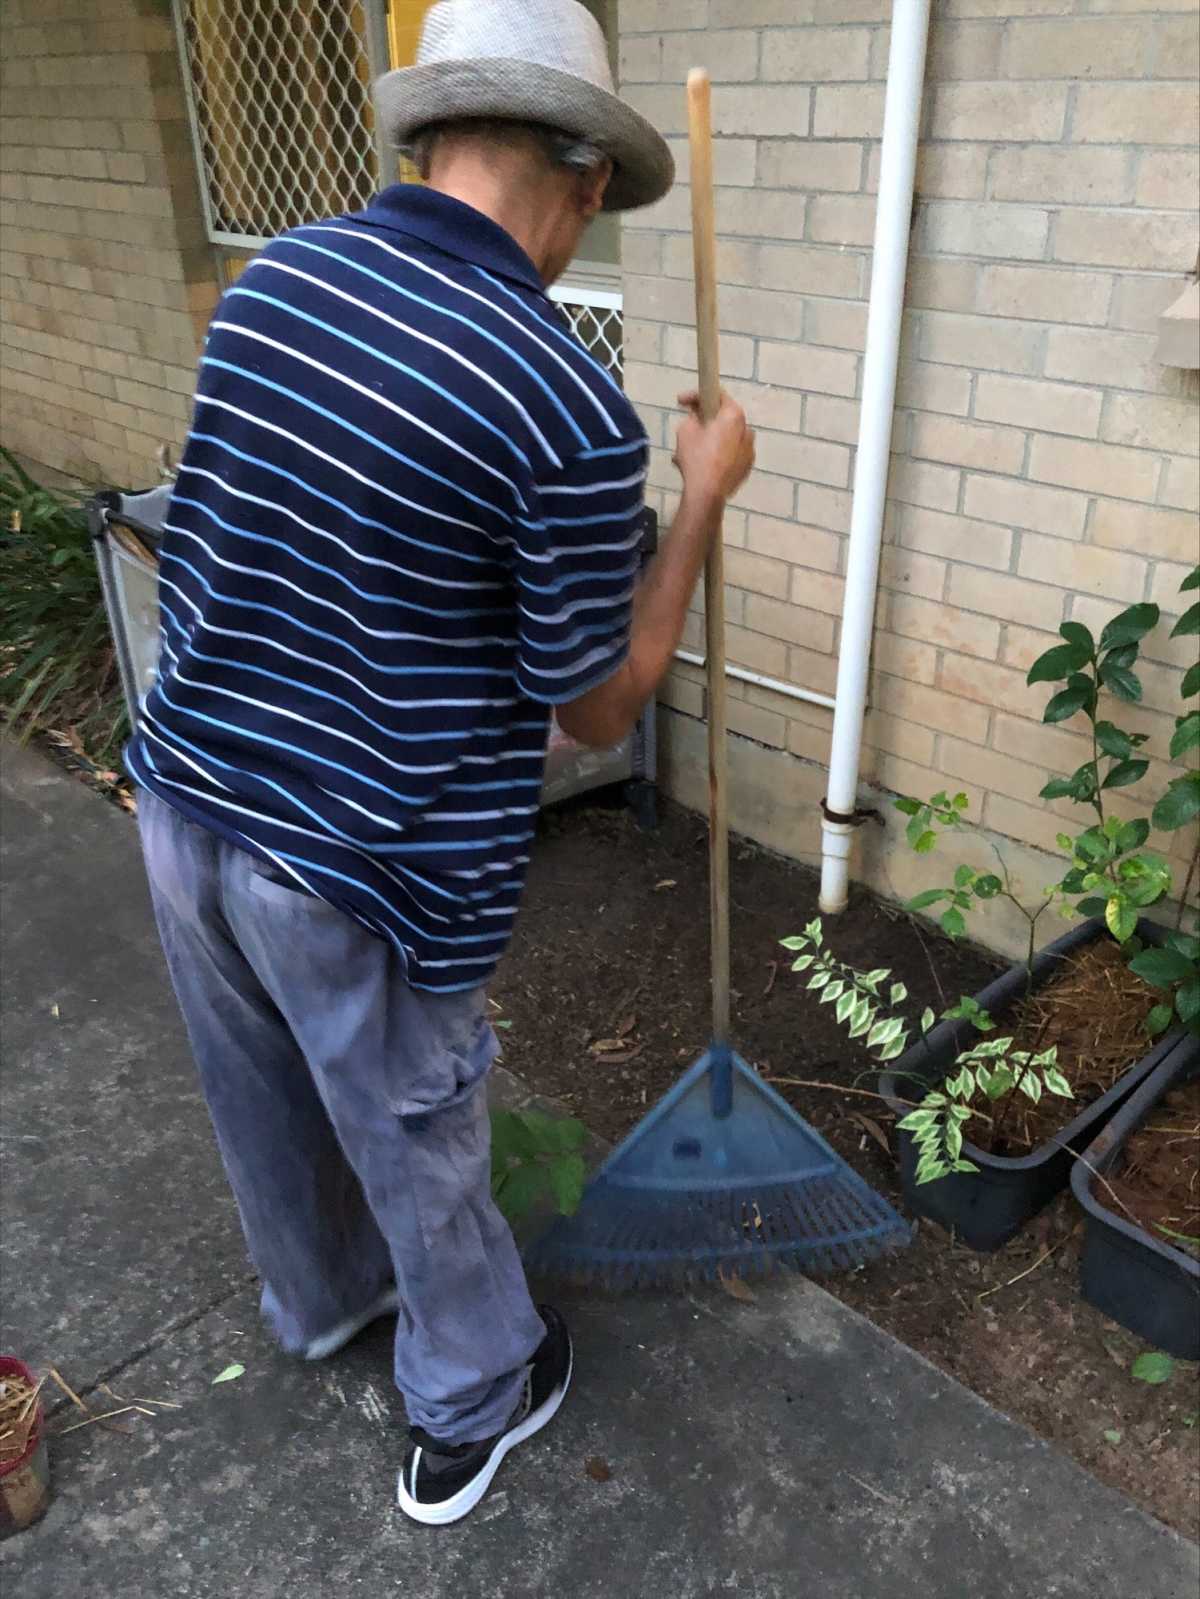 Simon holding a rake, gardening outside.